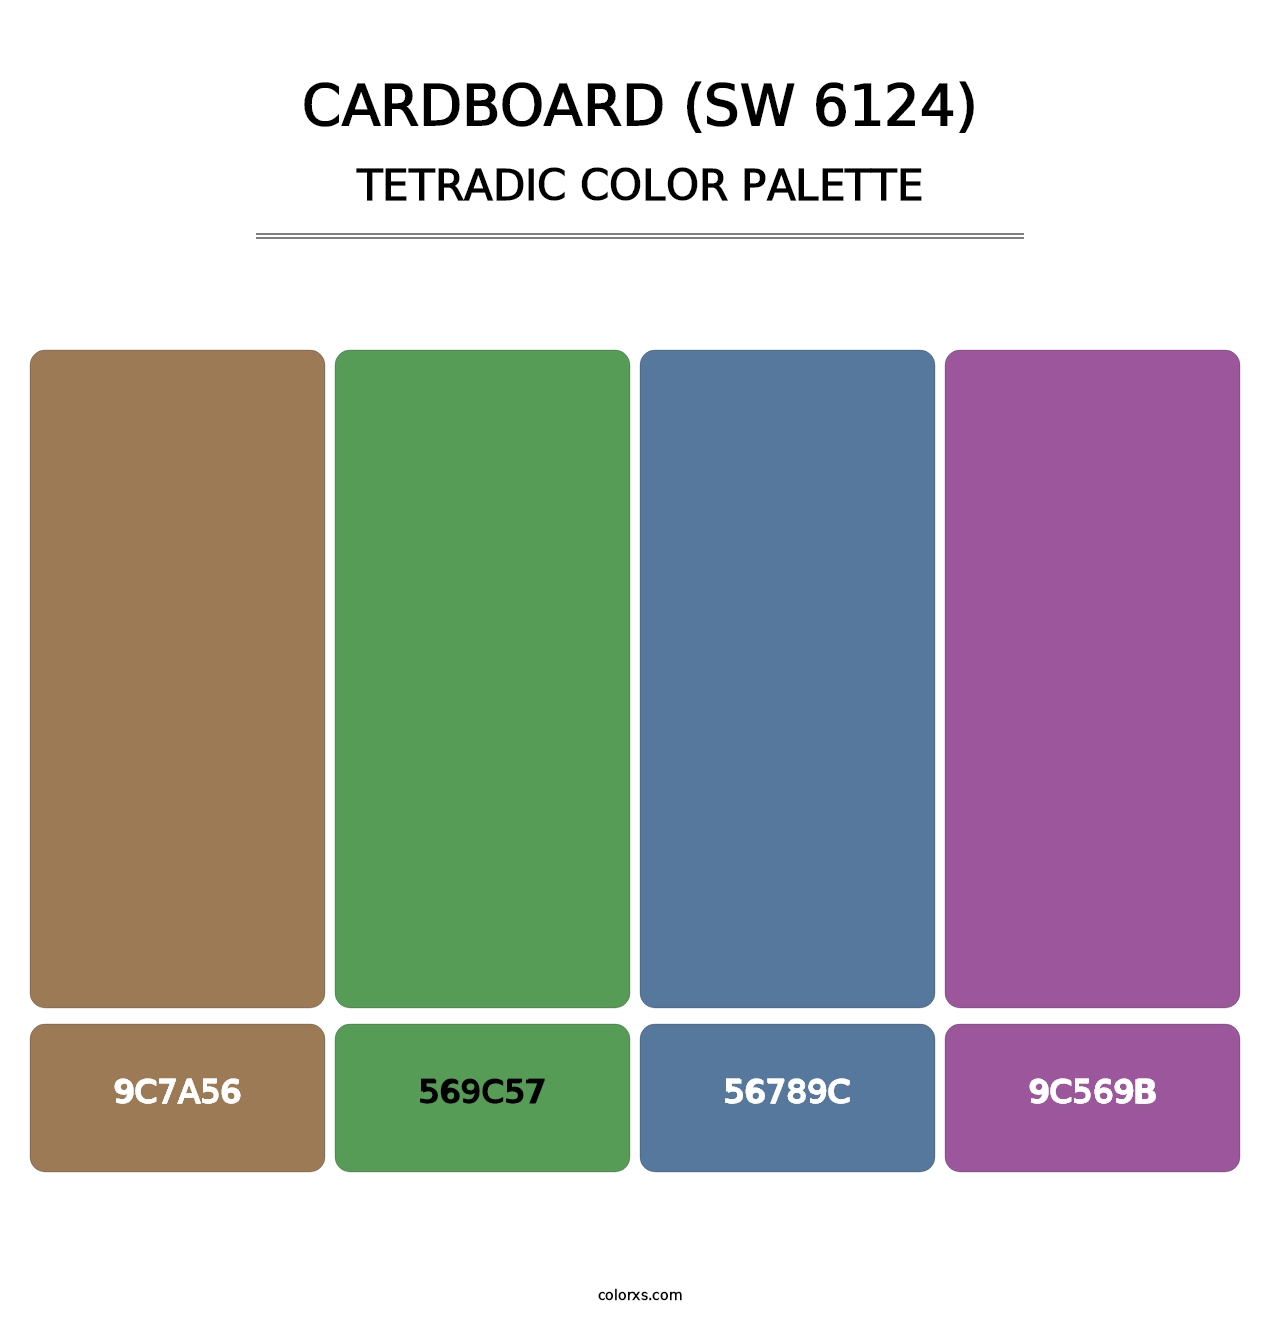 Cardboard (SW 6124) - Tetradic Color Palette